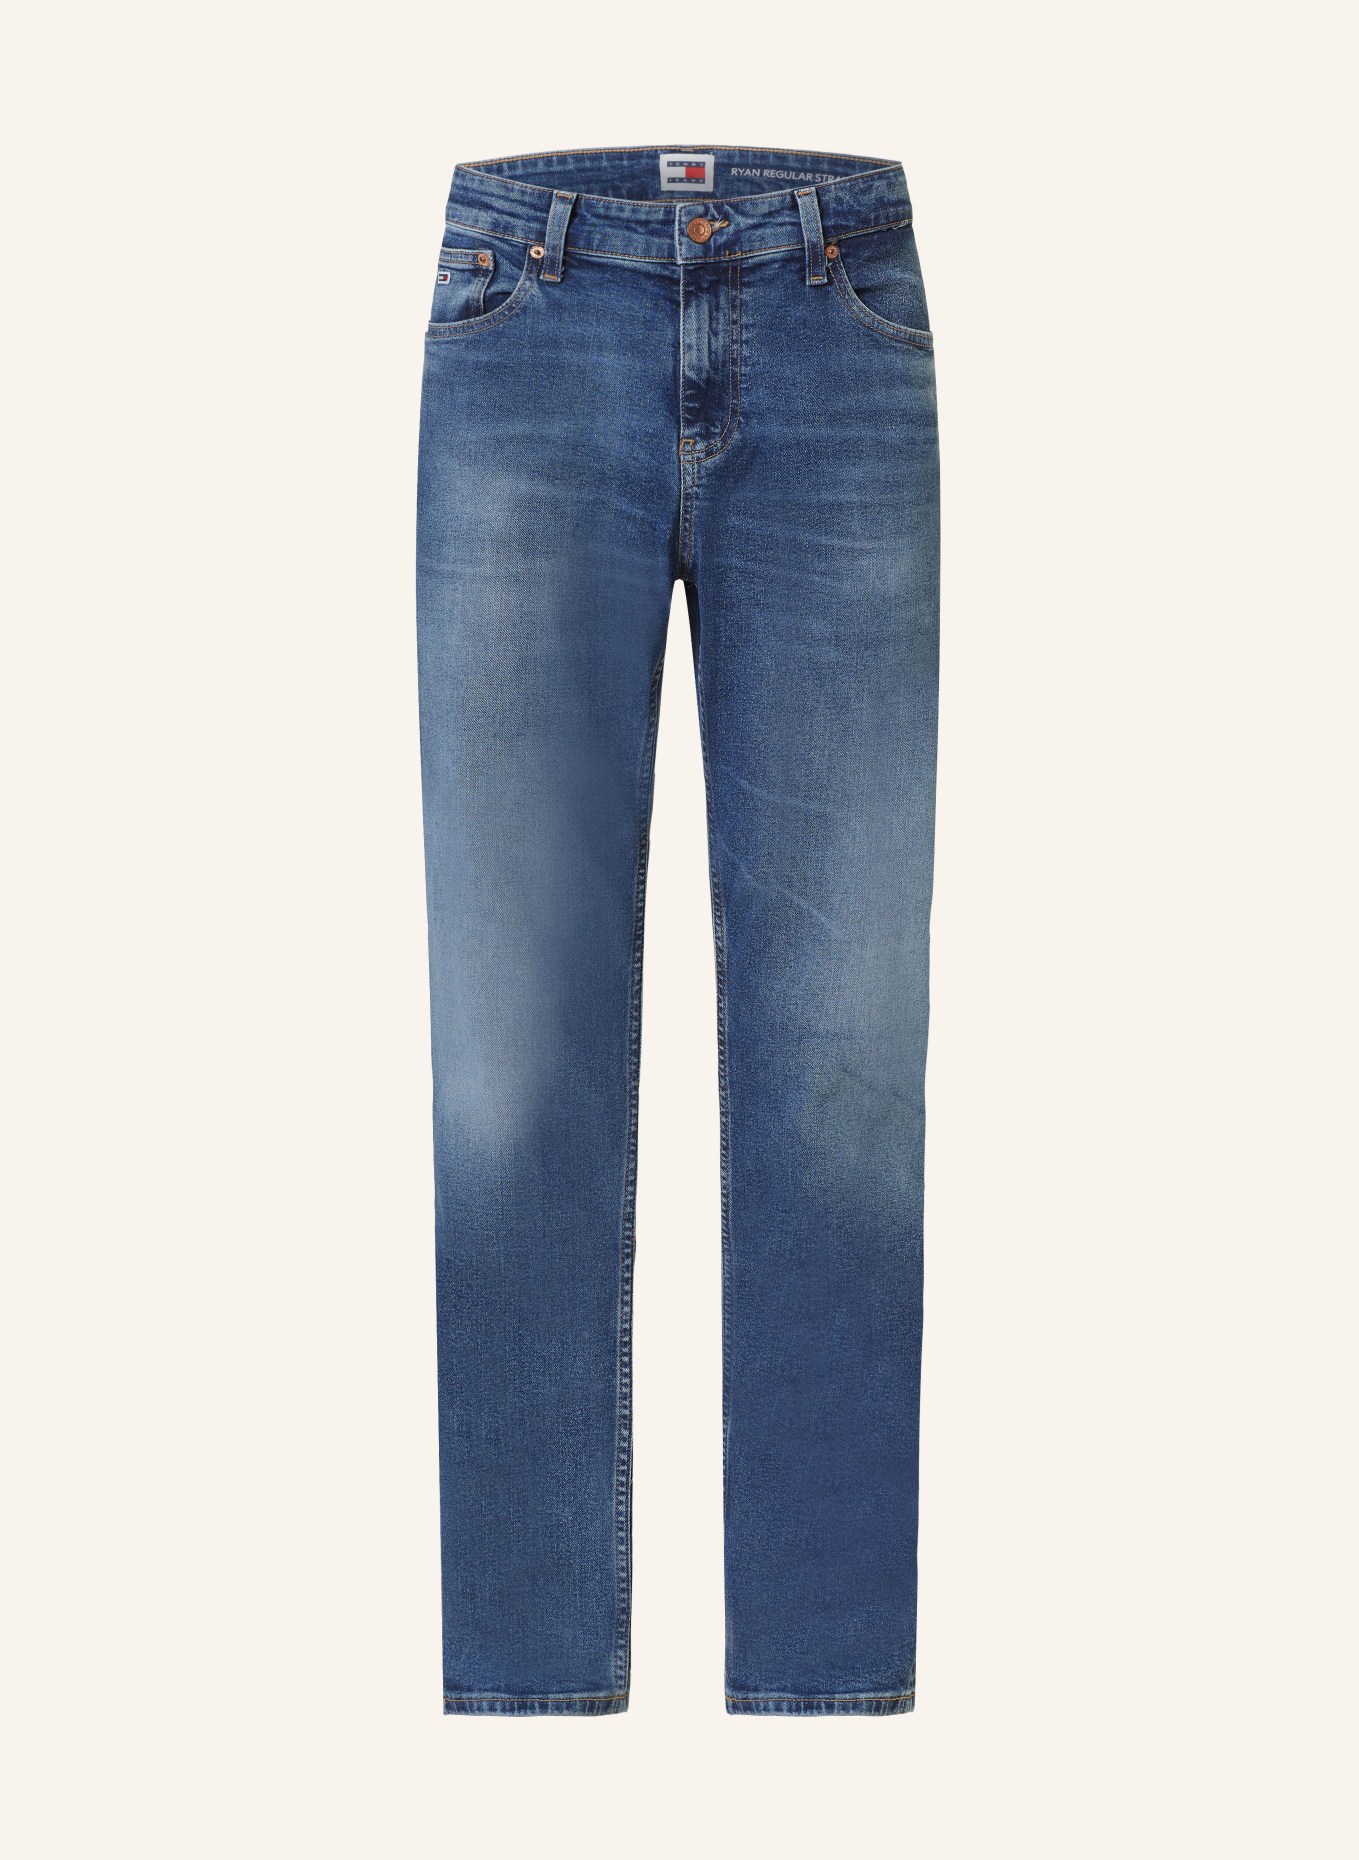 TOMMY JEANS Jeans RYAN Regular Straight Fit, Farbe: 1BK Denim Dark (Bild 1)